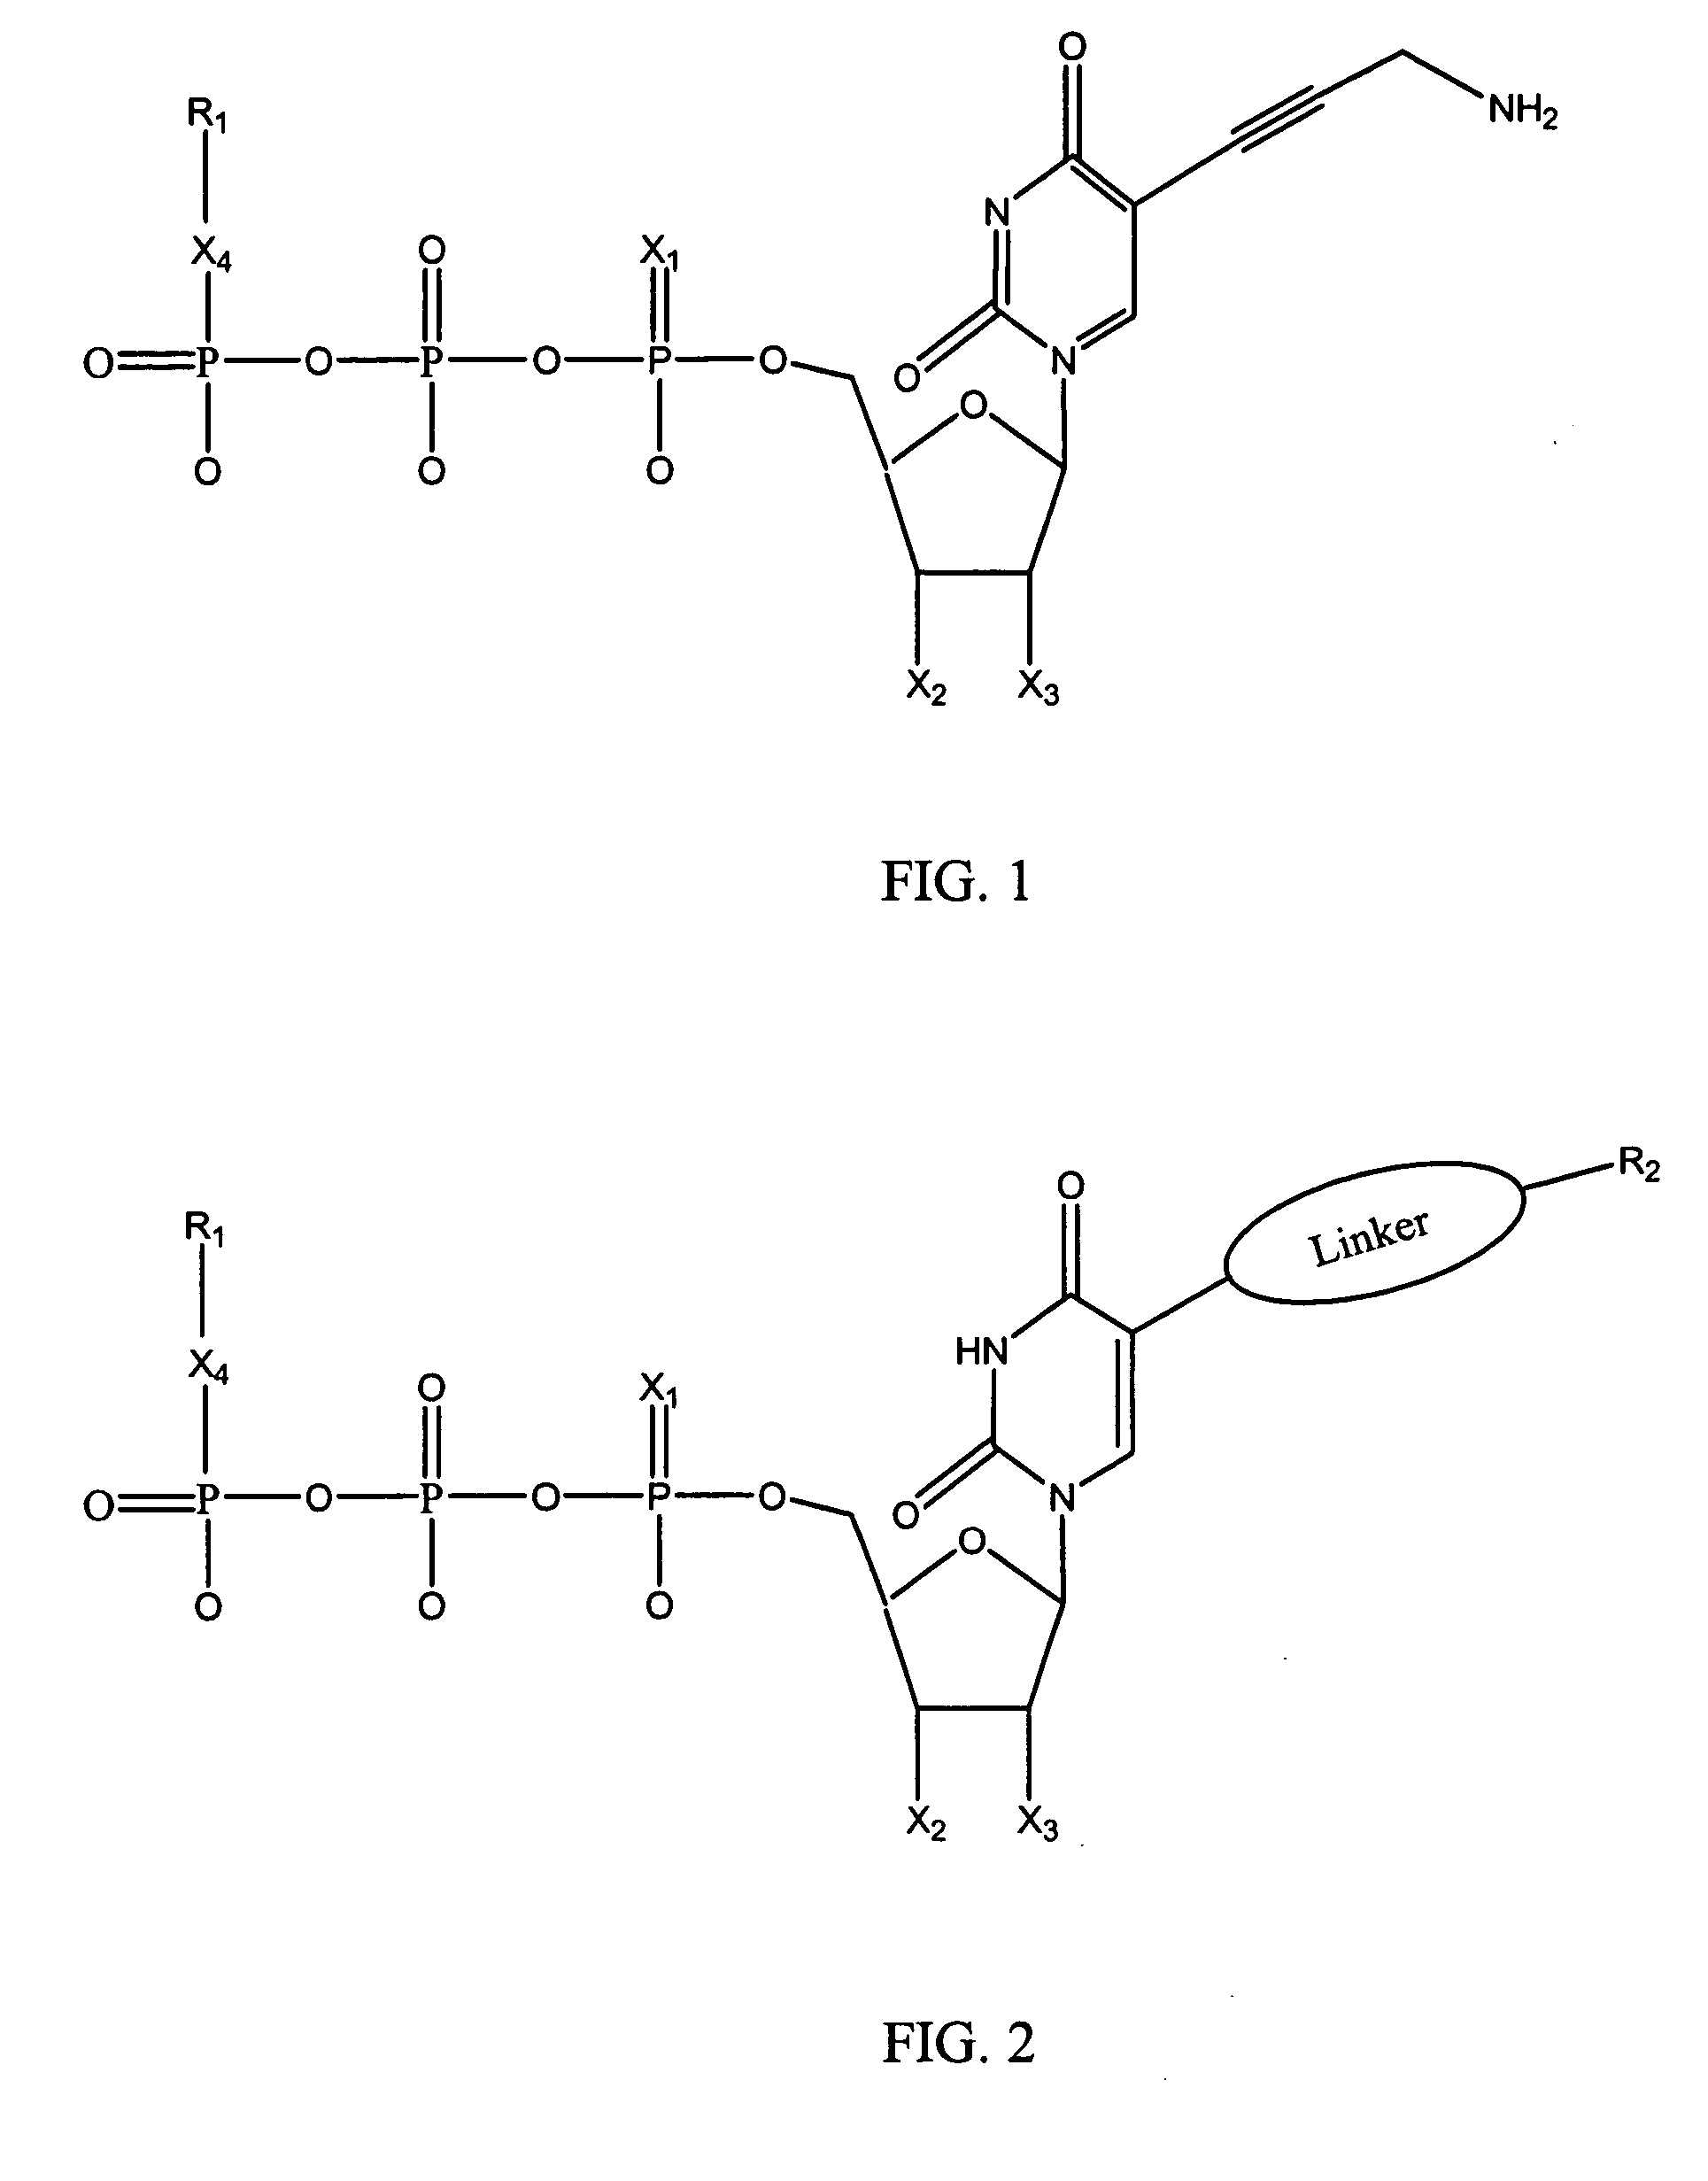 Nucleotide analogs